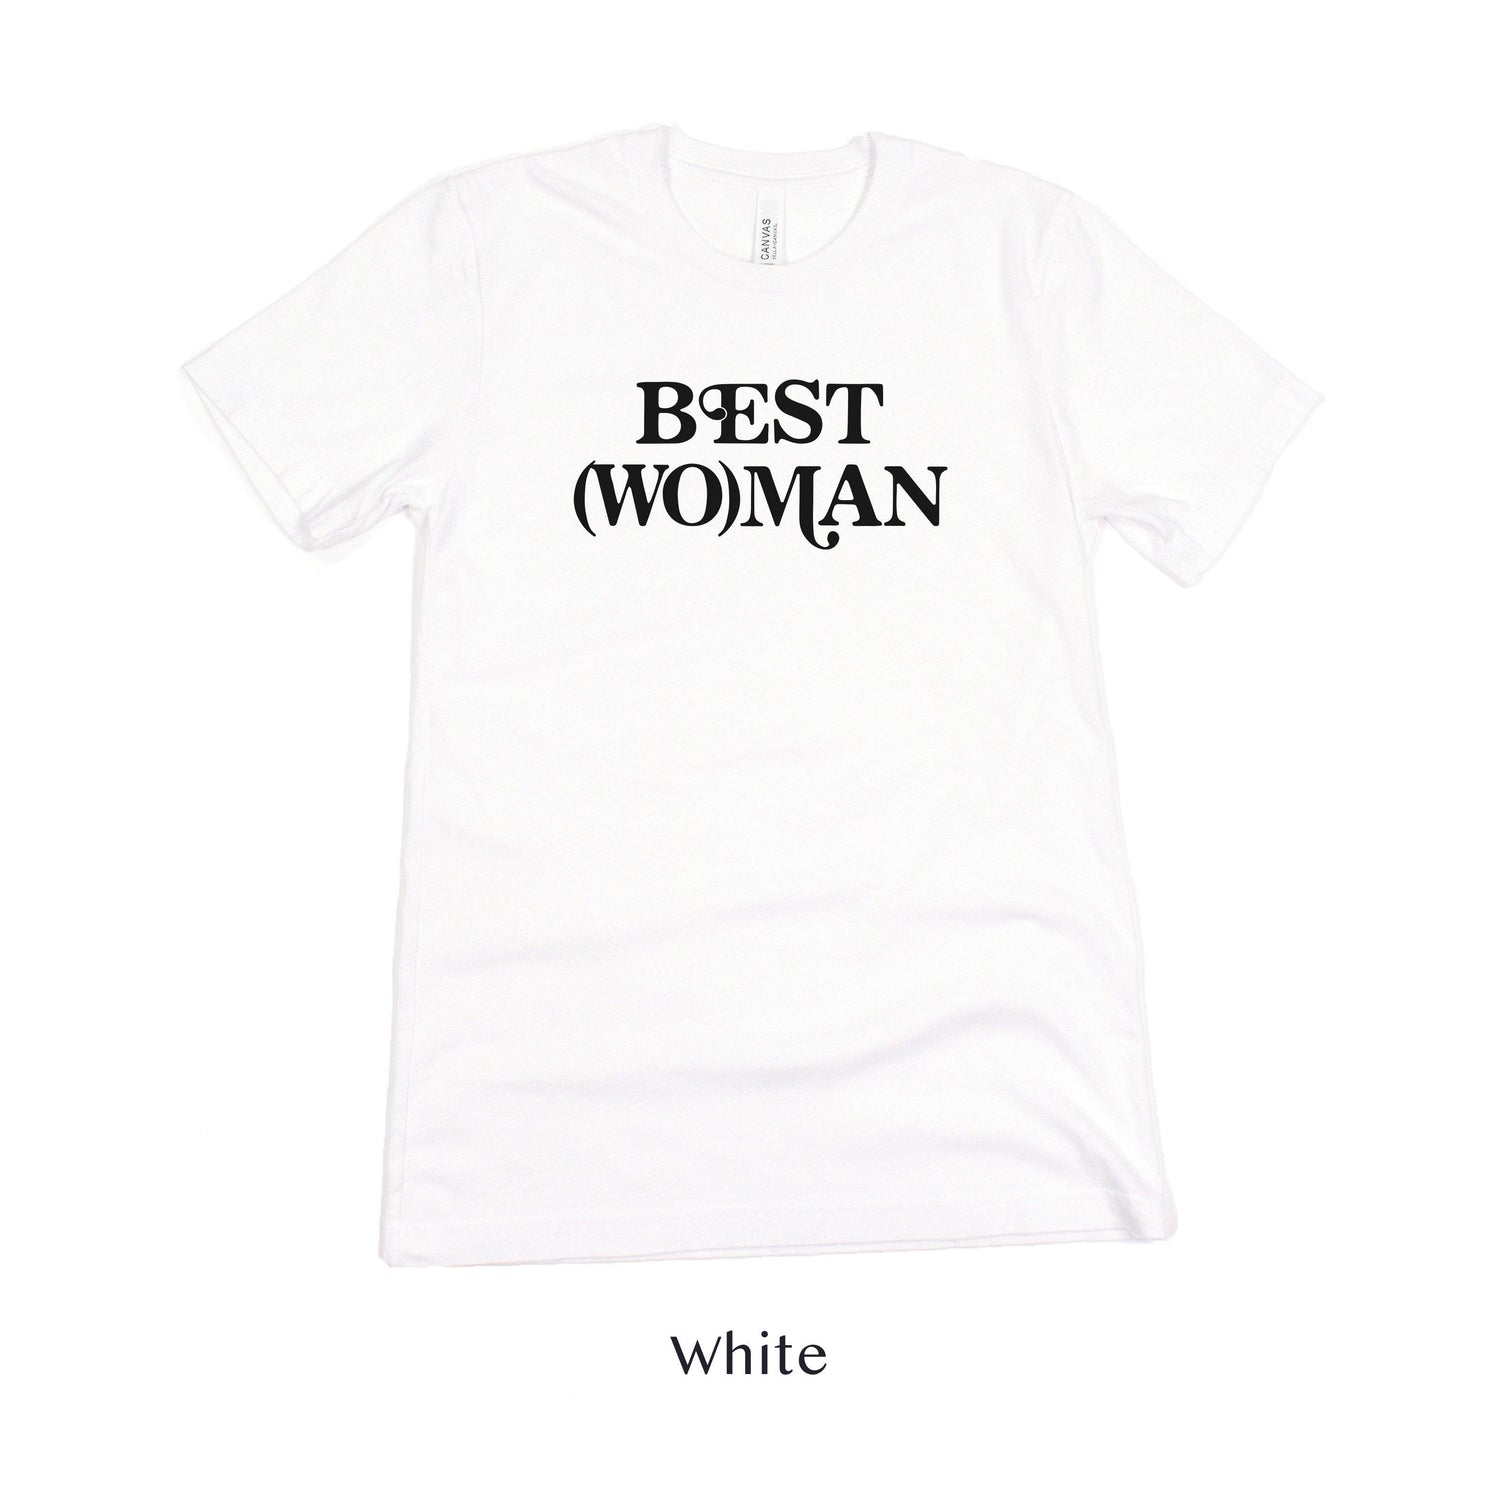 Best (Wo)man Retro Short-sleeve Tee for Best Woman by Oaklynn Lane - White Shirt